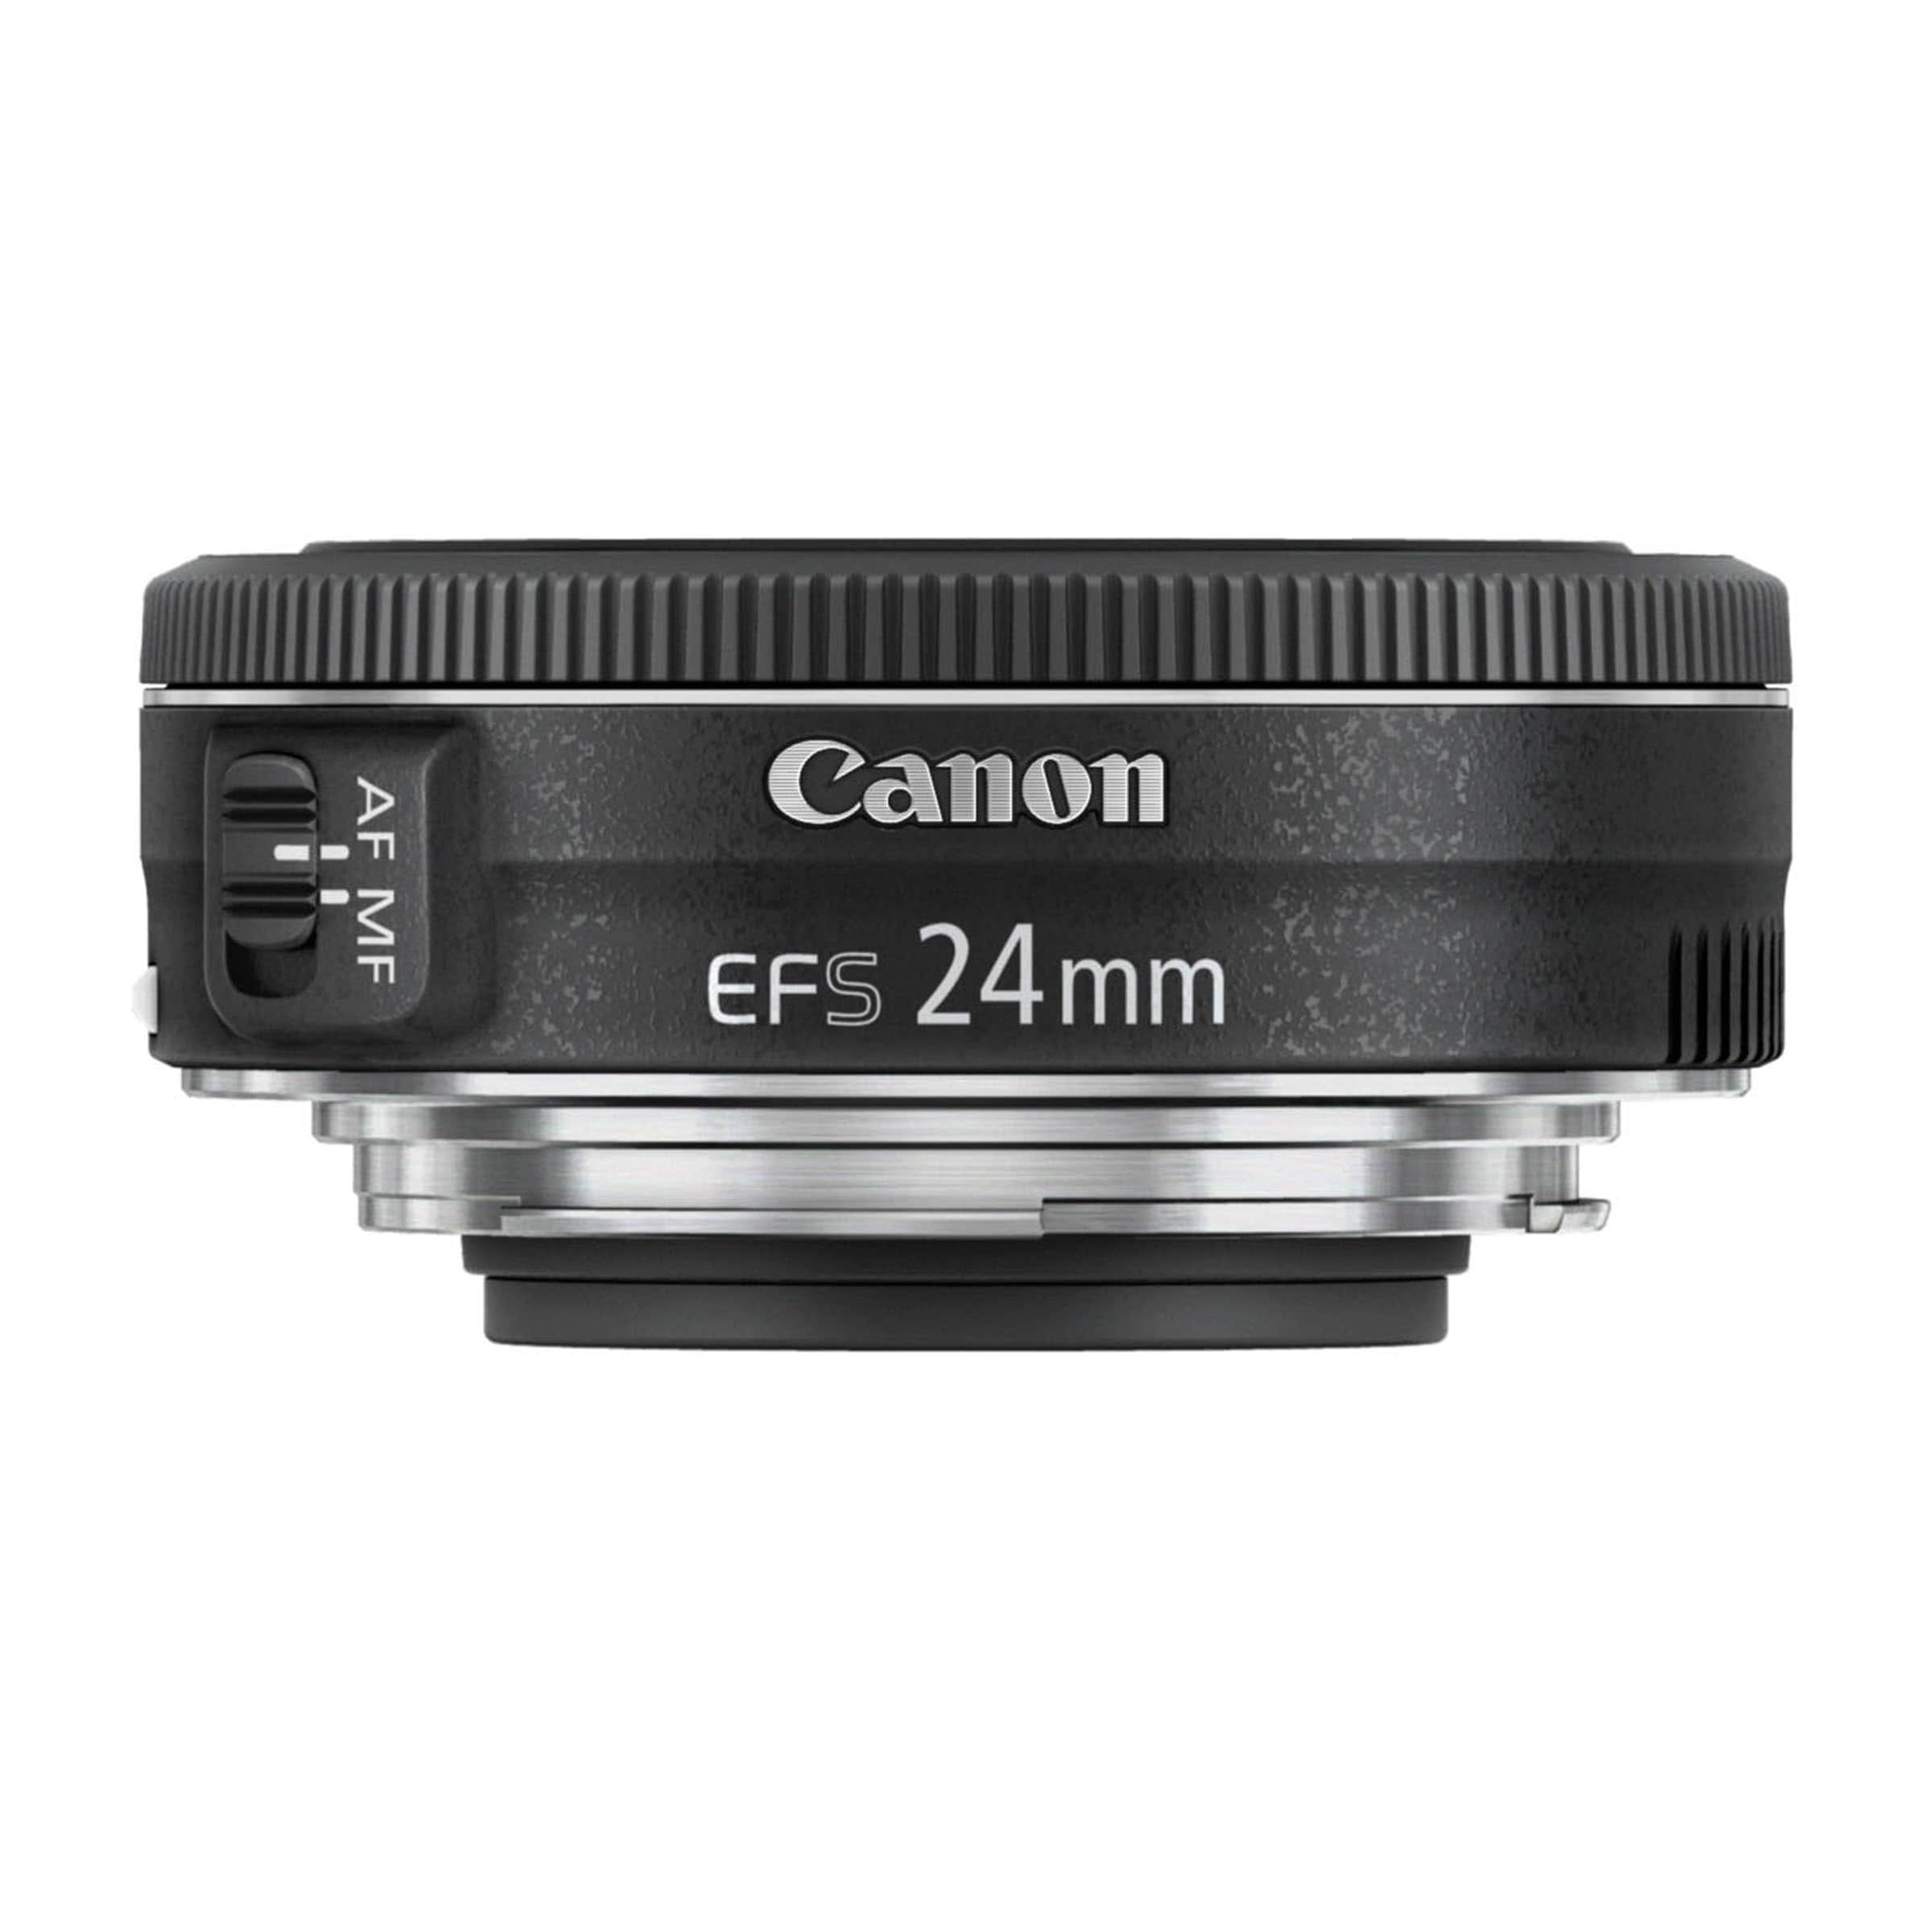 EF-S 24mm f2.8 STM Side without cap